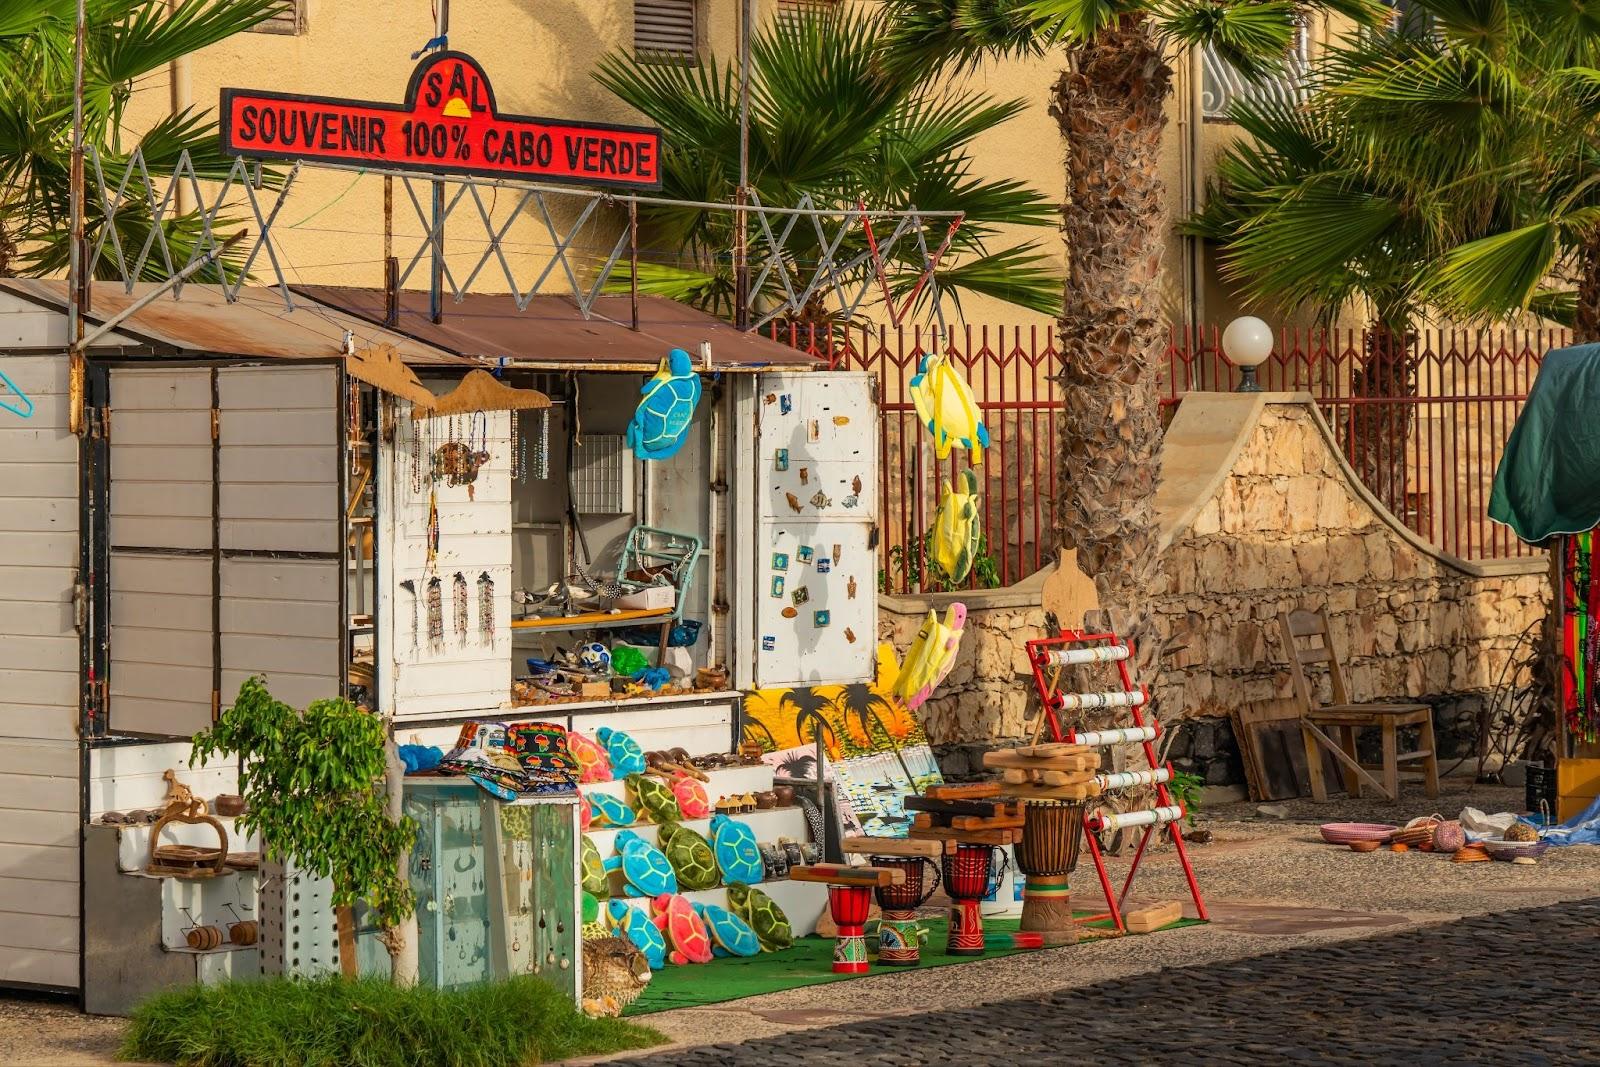 Santa Maria, Sal Island - Cape Verde. The promenade of Santa Maria with souvenir shops